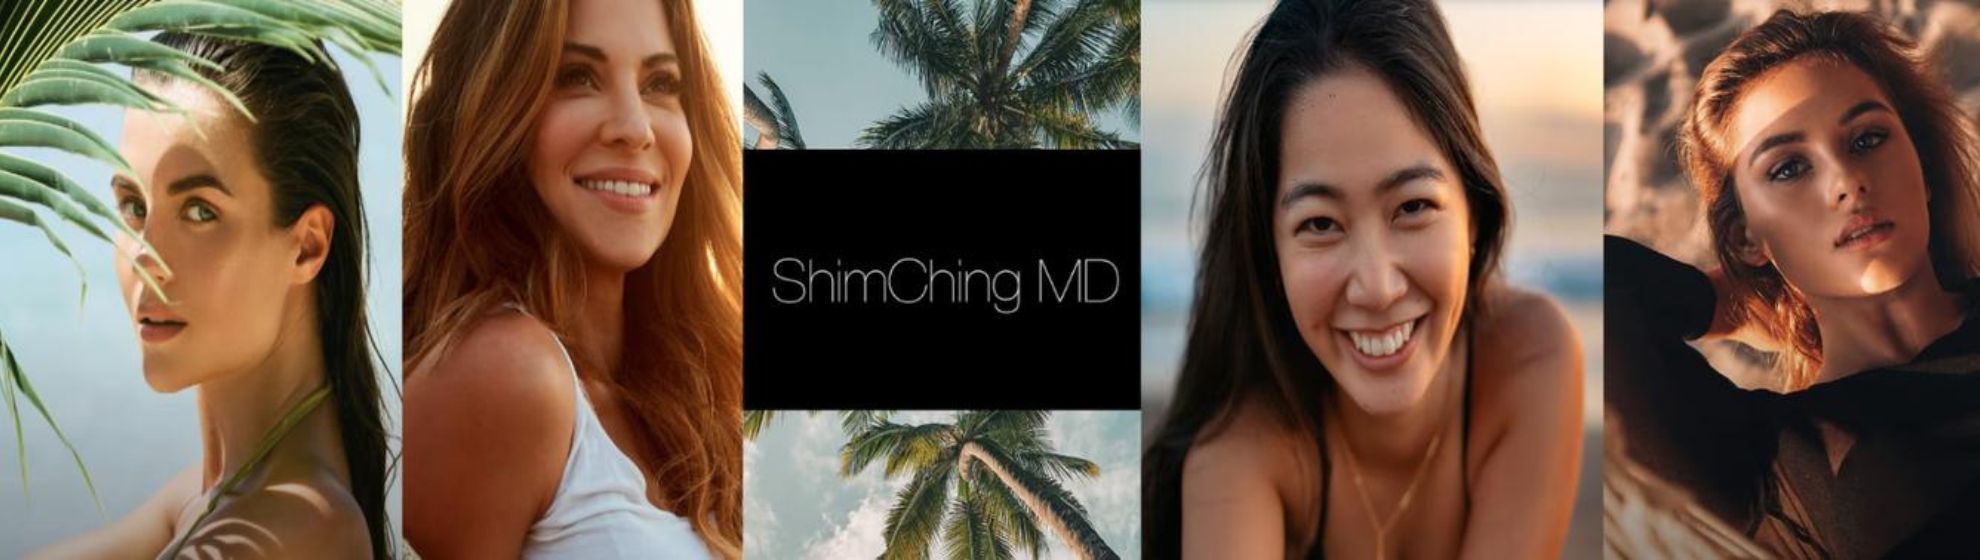 دكتور شيم شينج - Dr Shim Ching